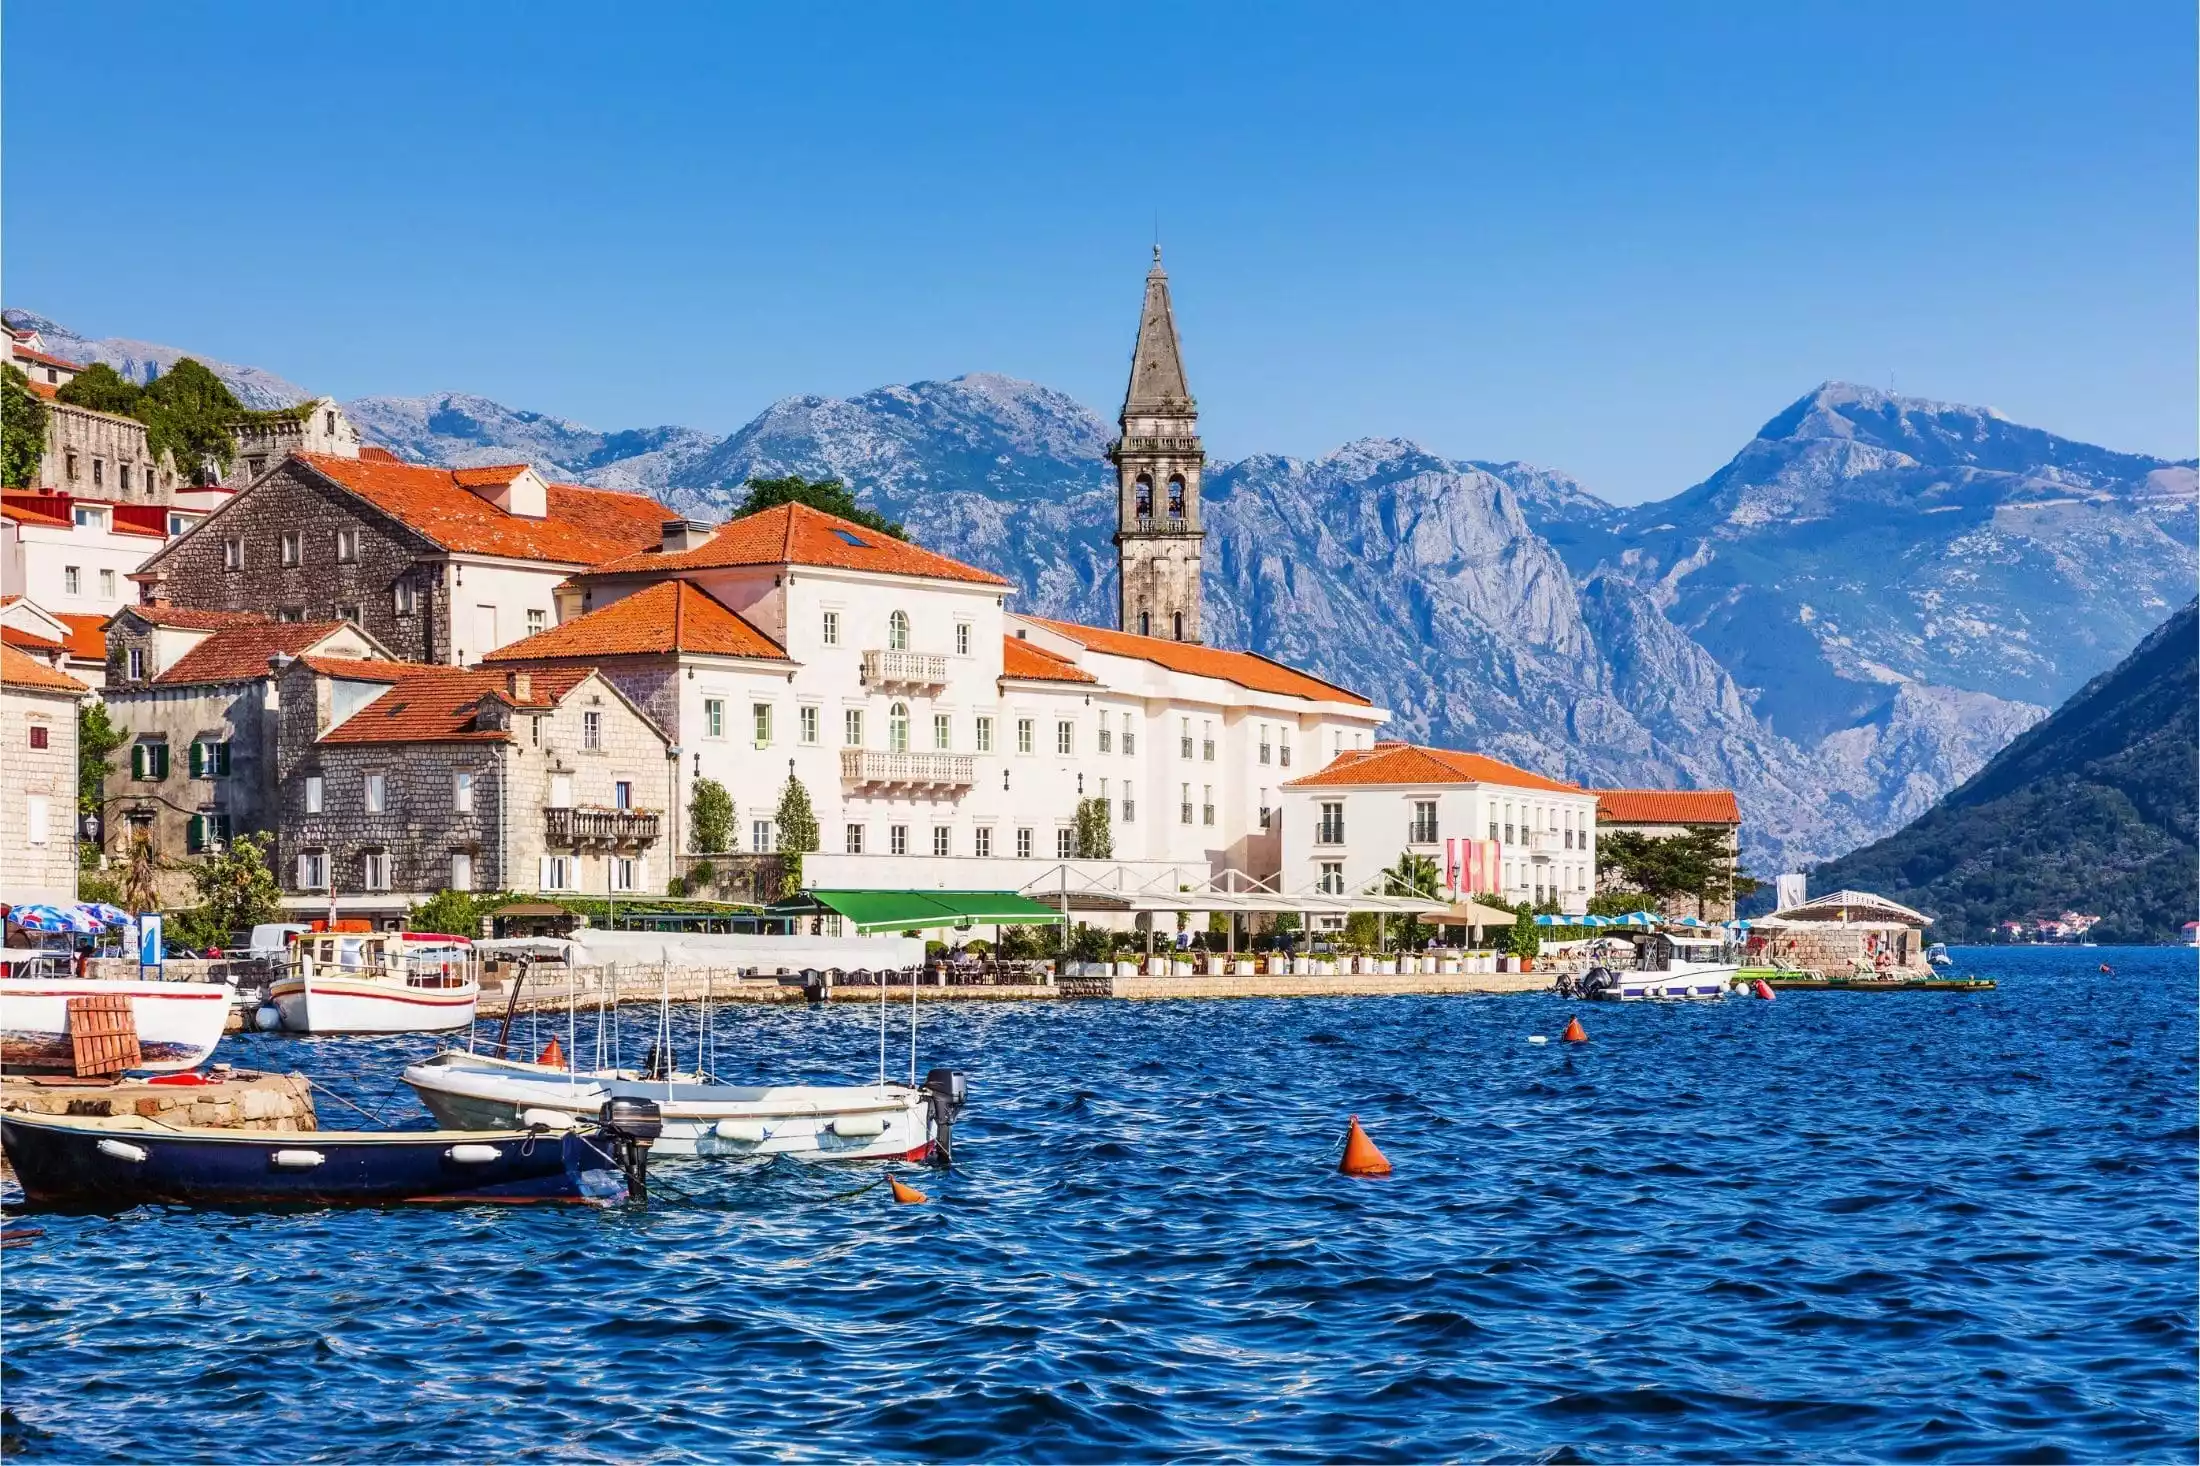 Rustic fishing village Perast in the Bay of Kotor, Montenegro